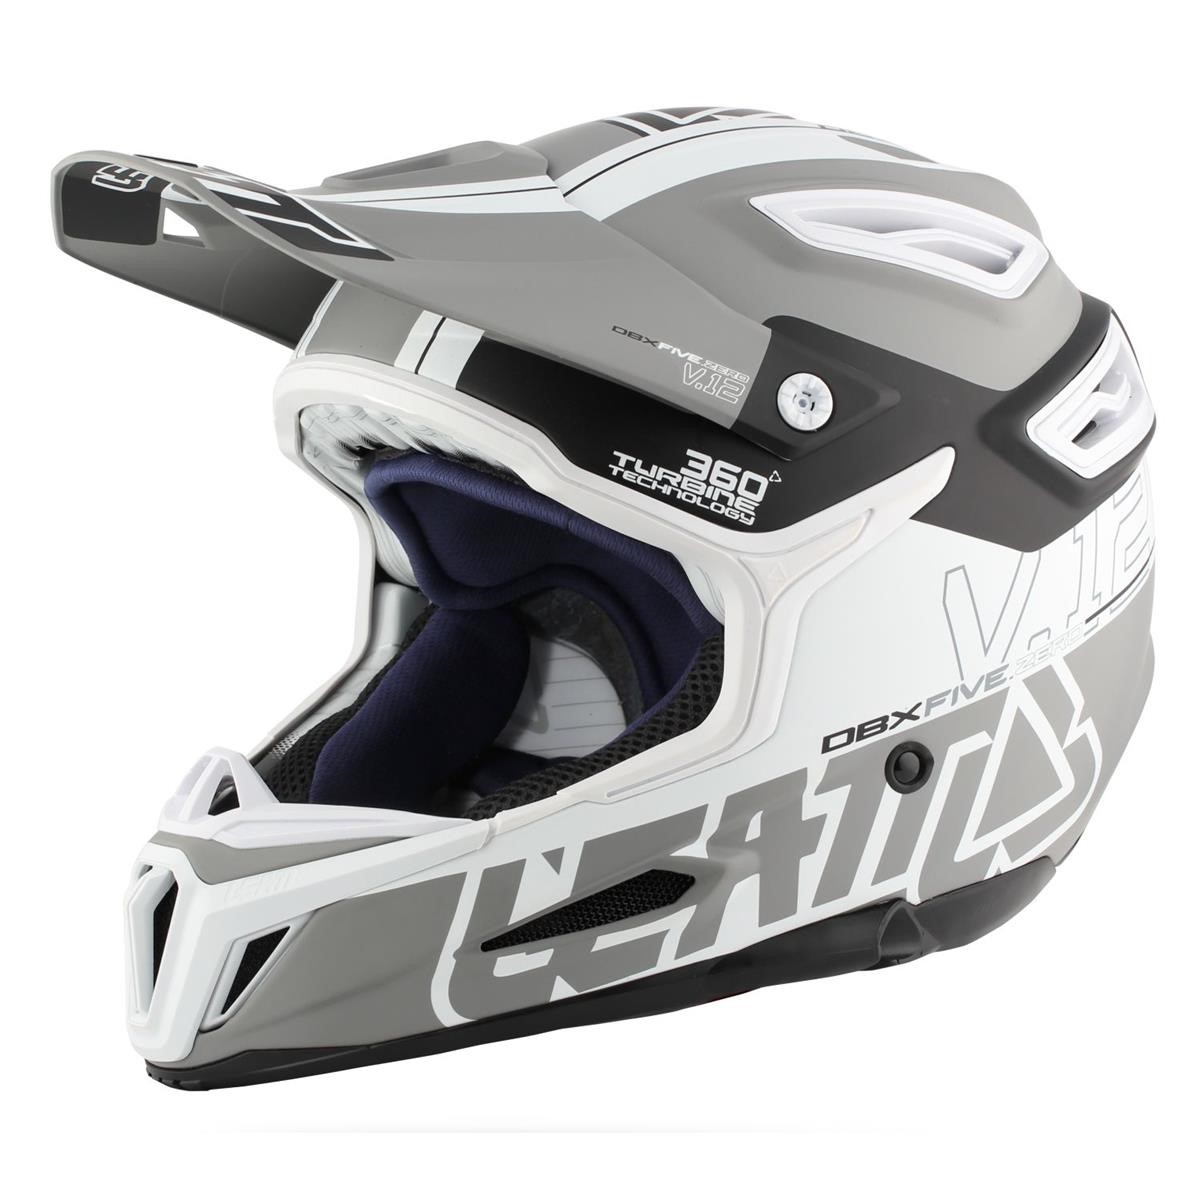 Leatt Downhill-MTB Helmet DBX 5.0 Composite Grey/Black/White